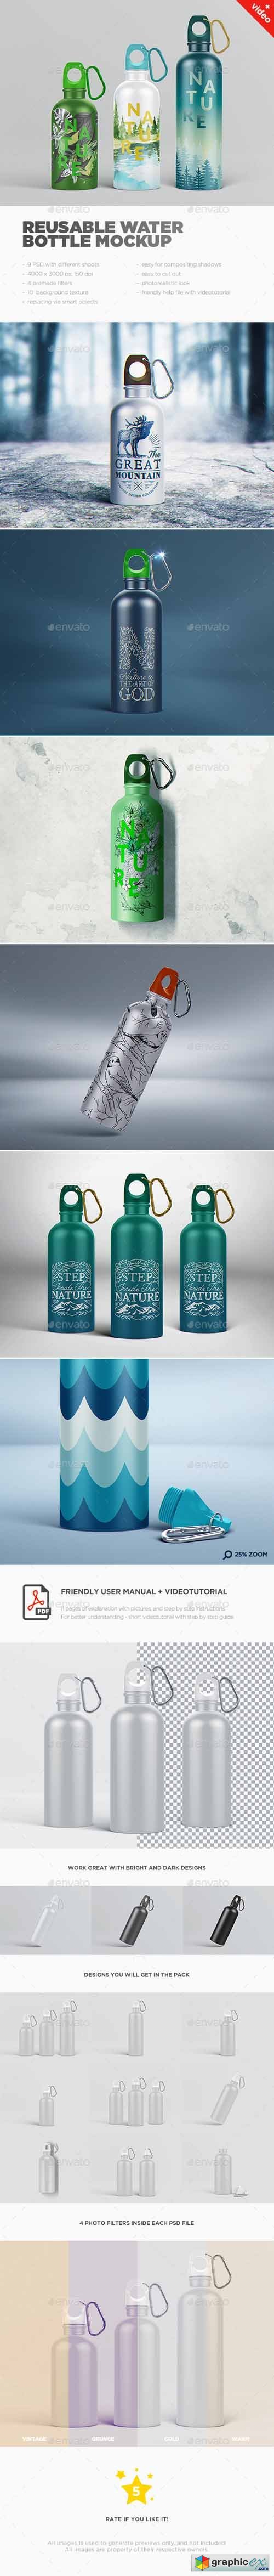 Reusable Water Bottle MockUp